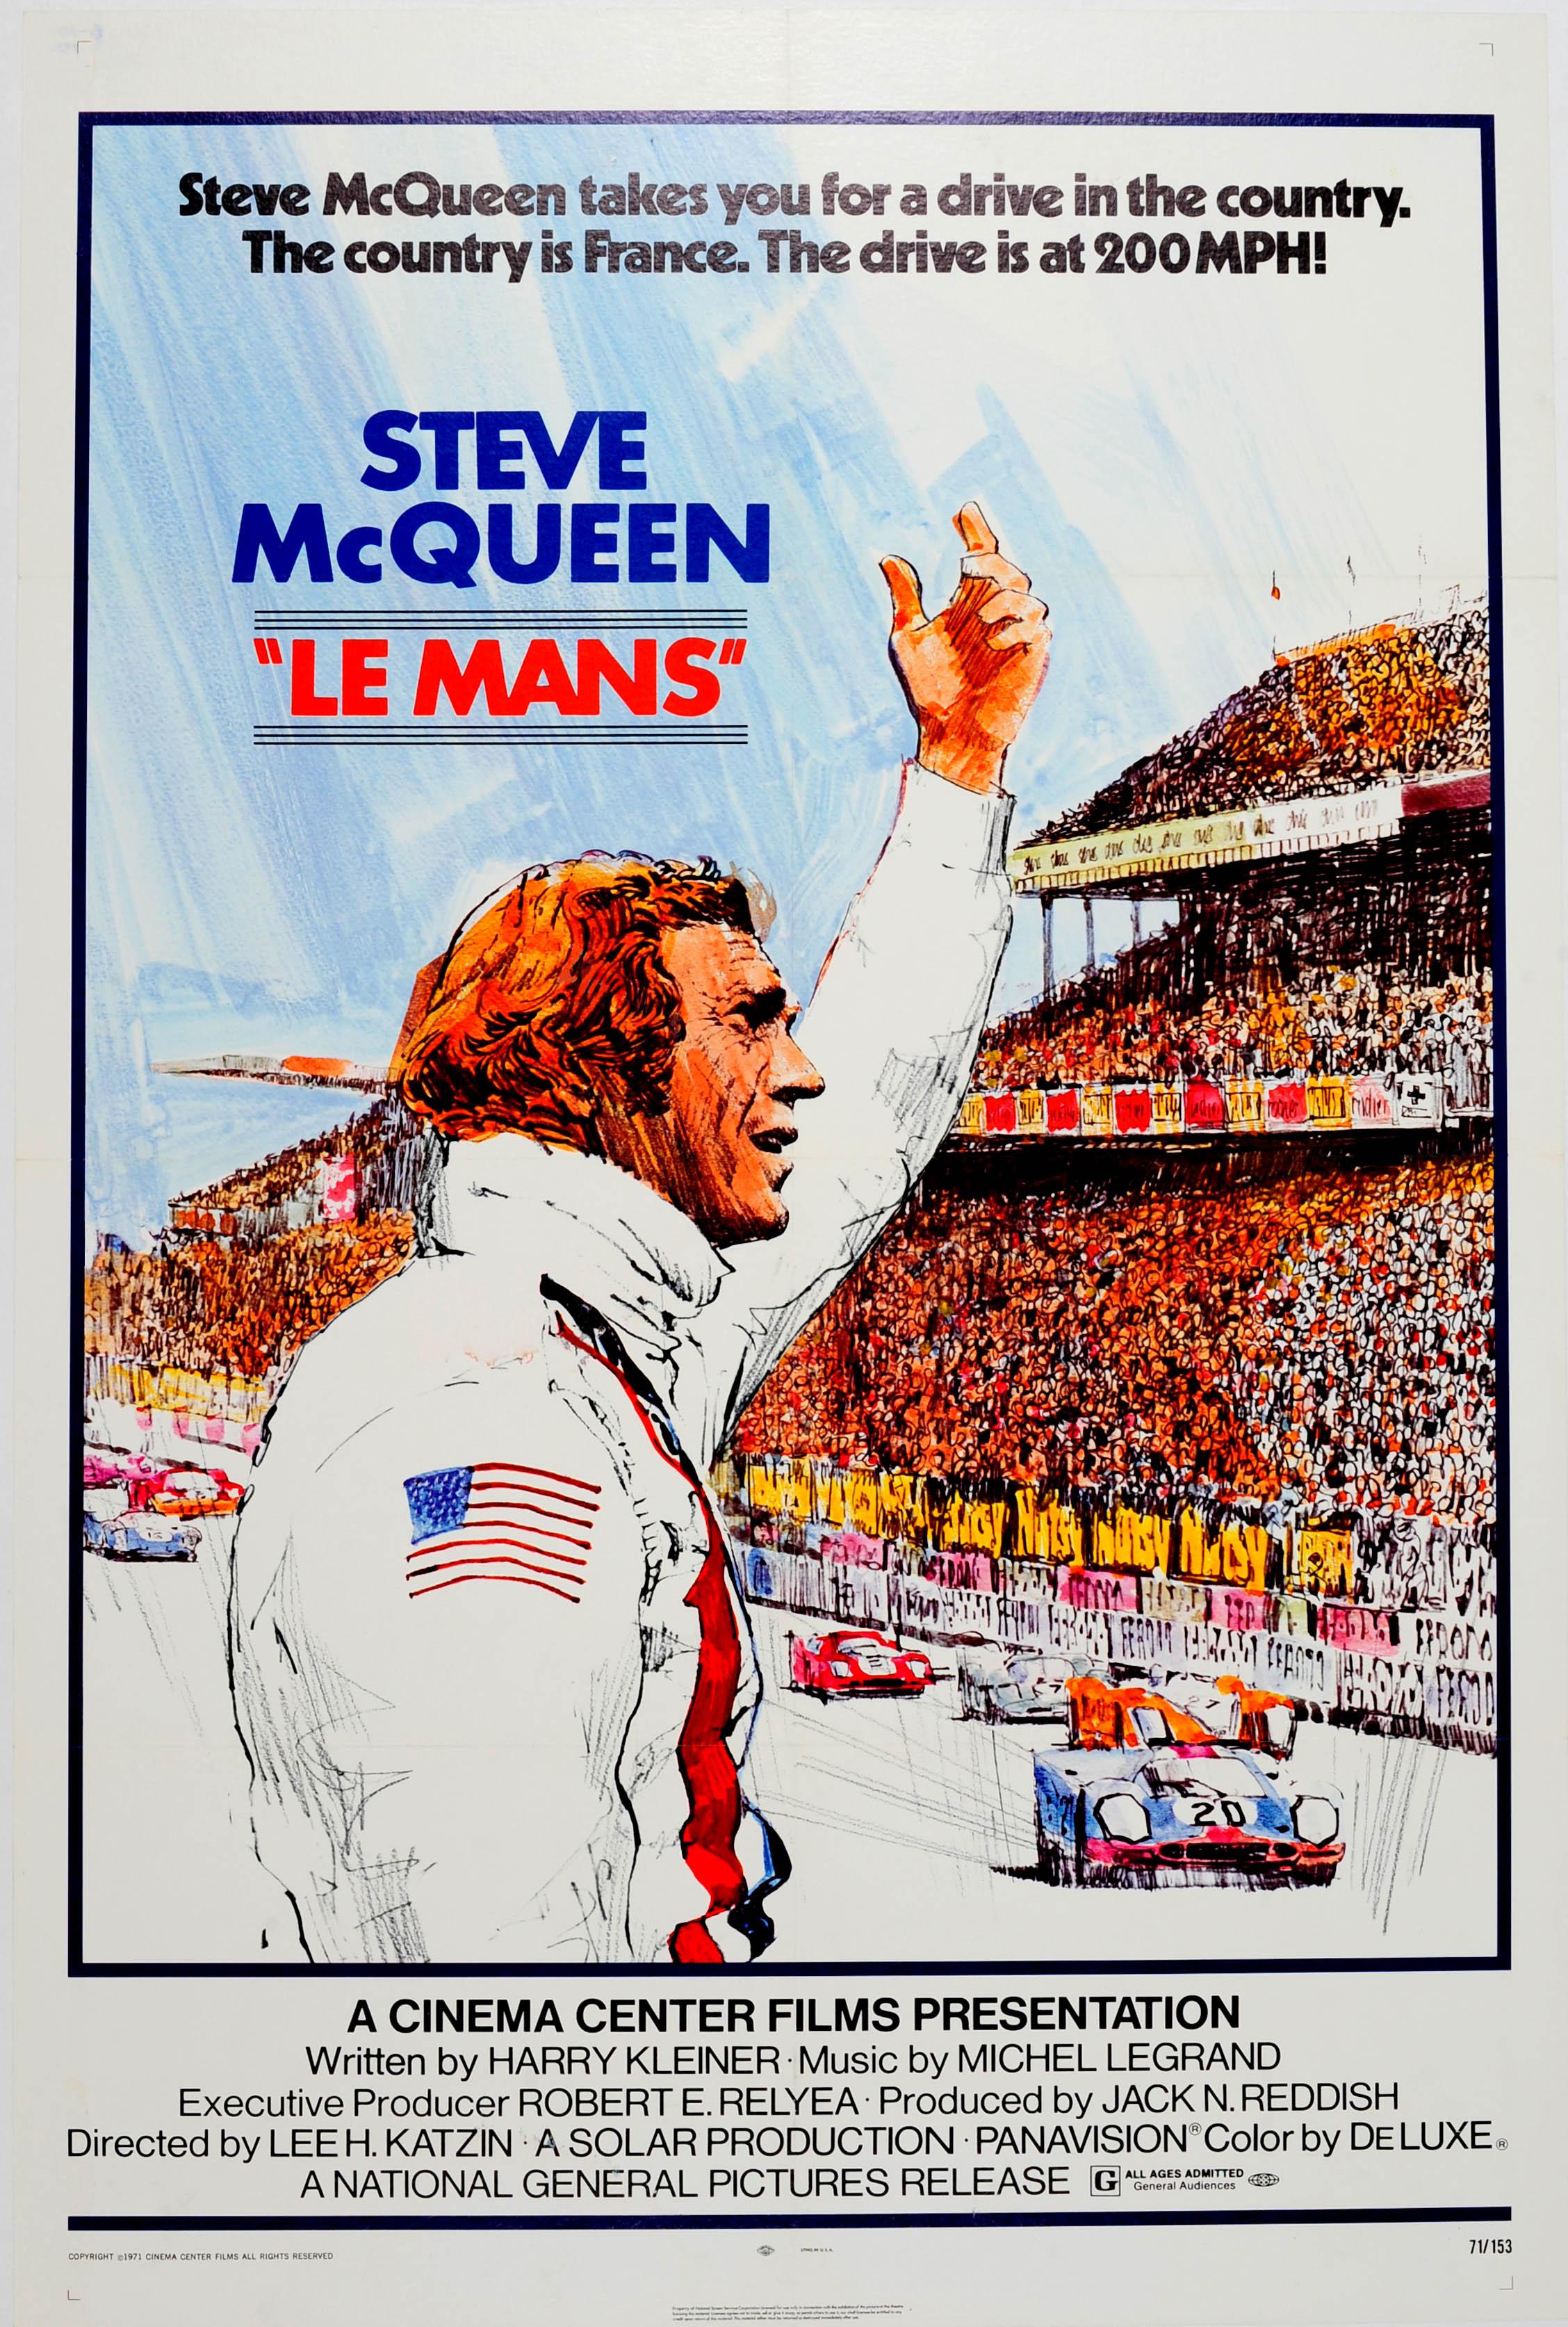 Tom Jung Print - Original Vintage Movie Poster For Le Mans Car Racing Film Starring Steve McQueen